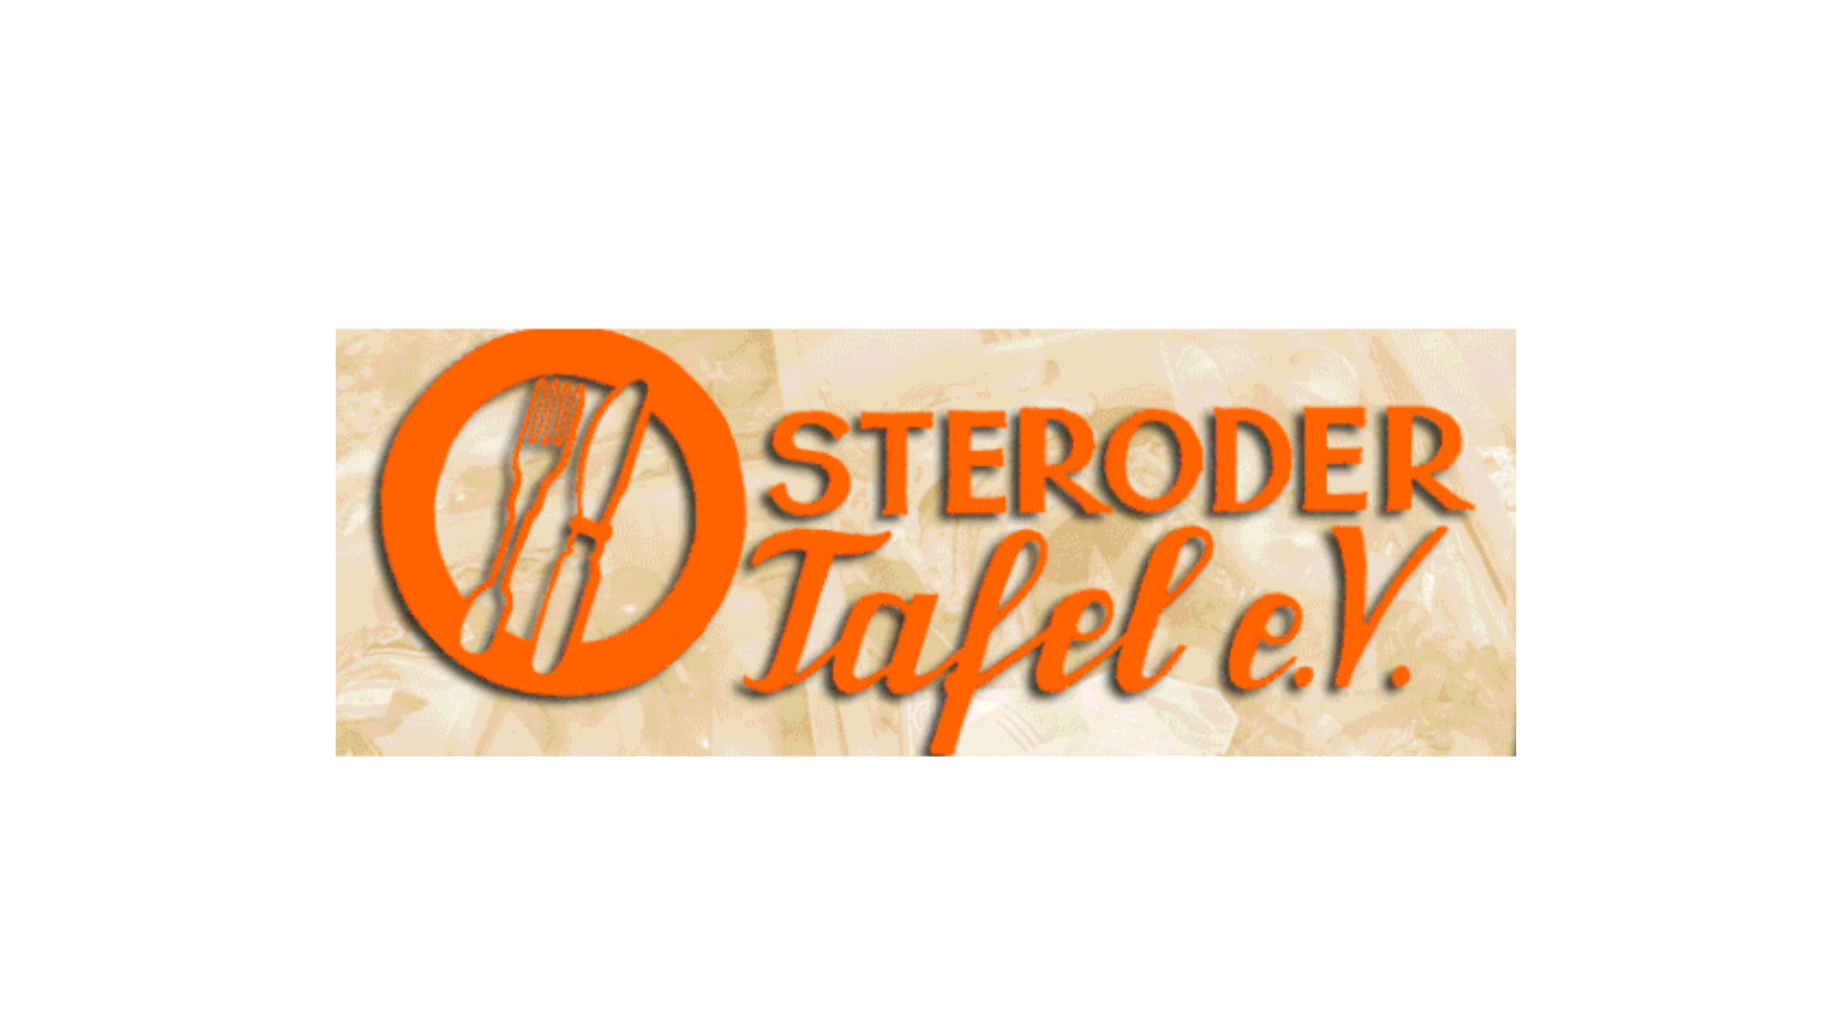 Osteroder Tafel e.V.) 